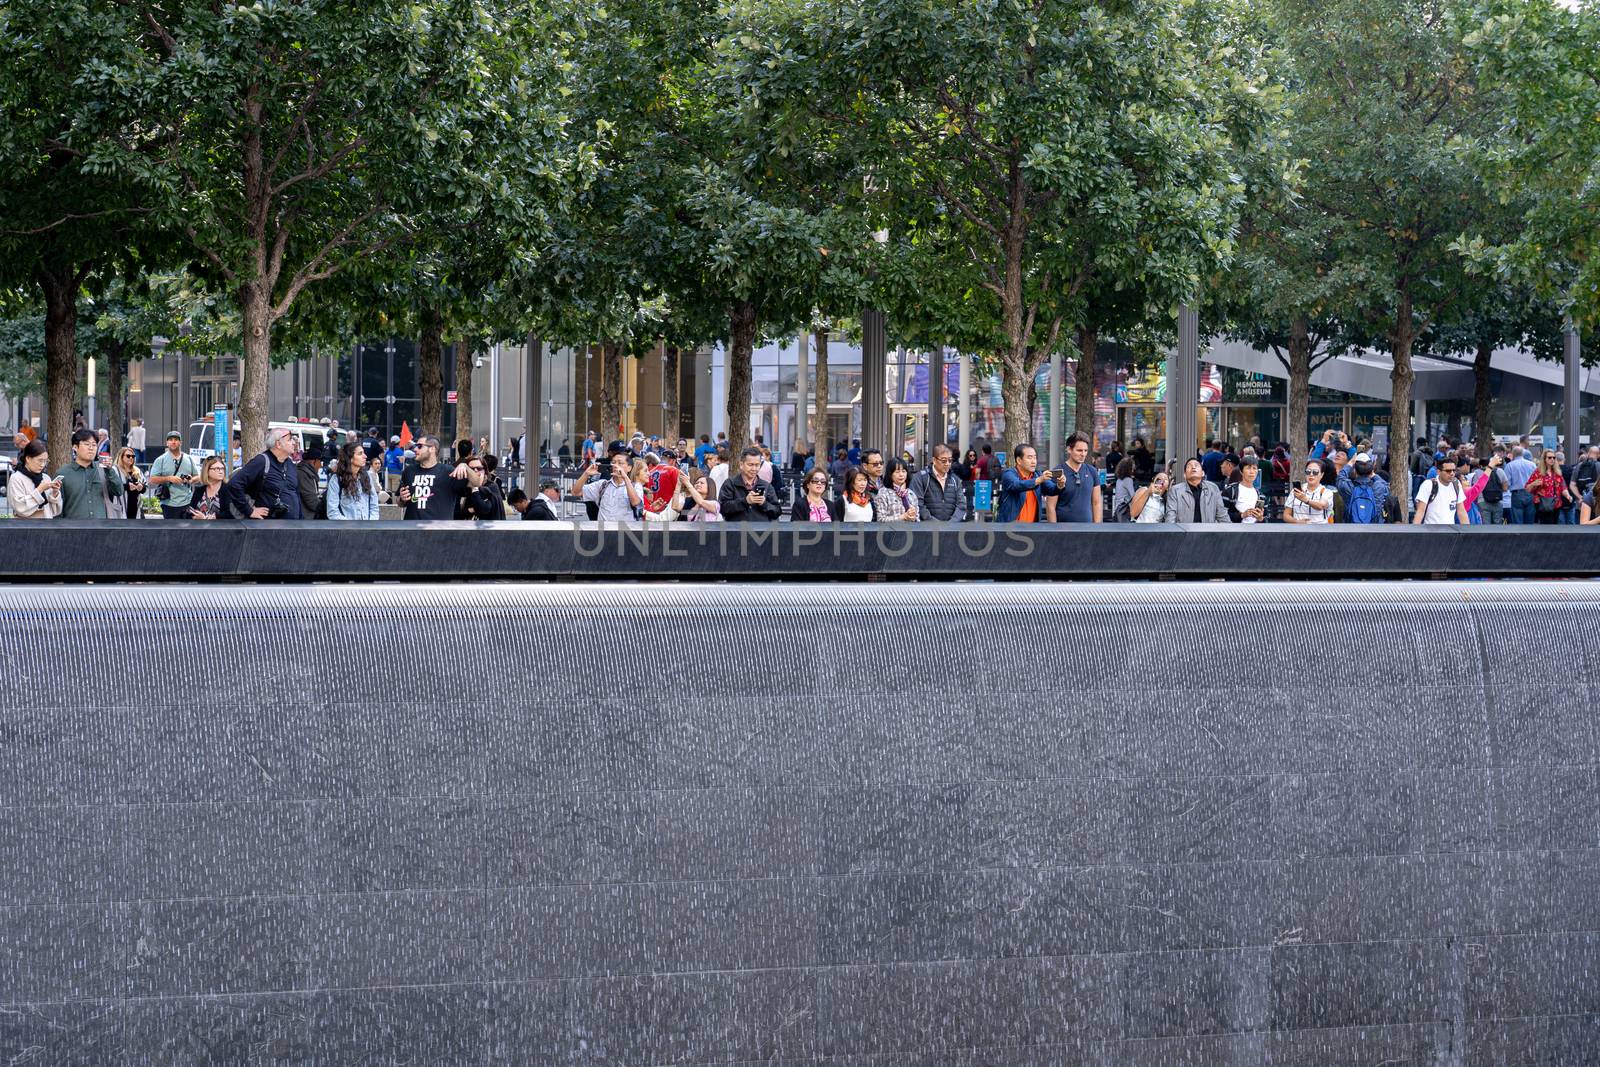 Memorial Pool at Ground Zero in Lower Manhattan, NYC by oliverfoerstner